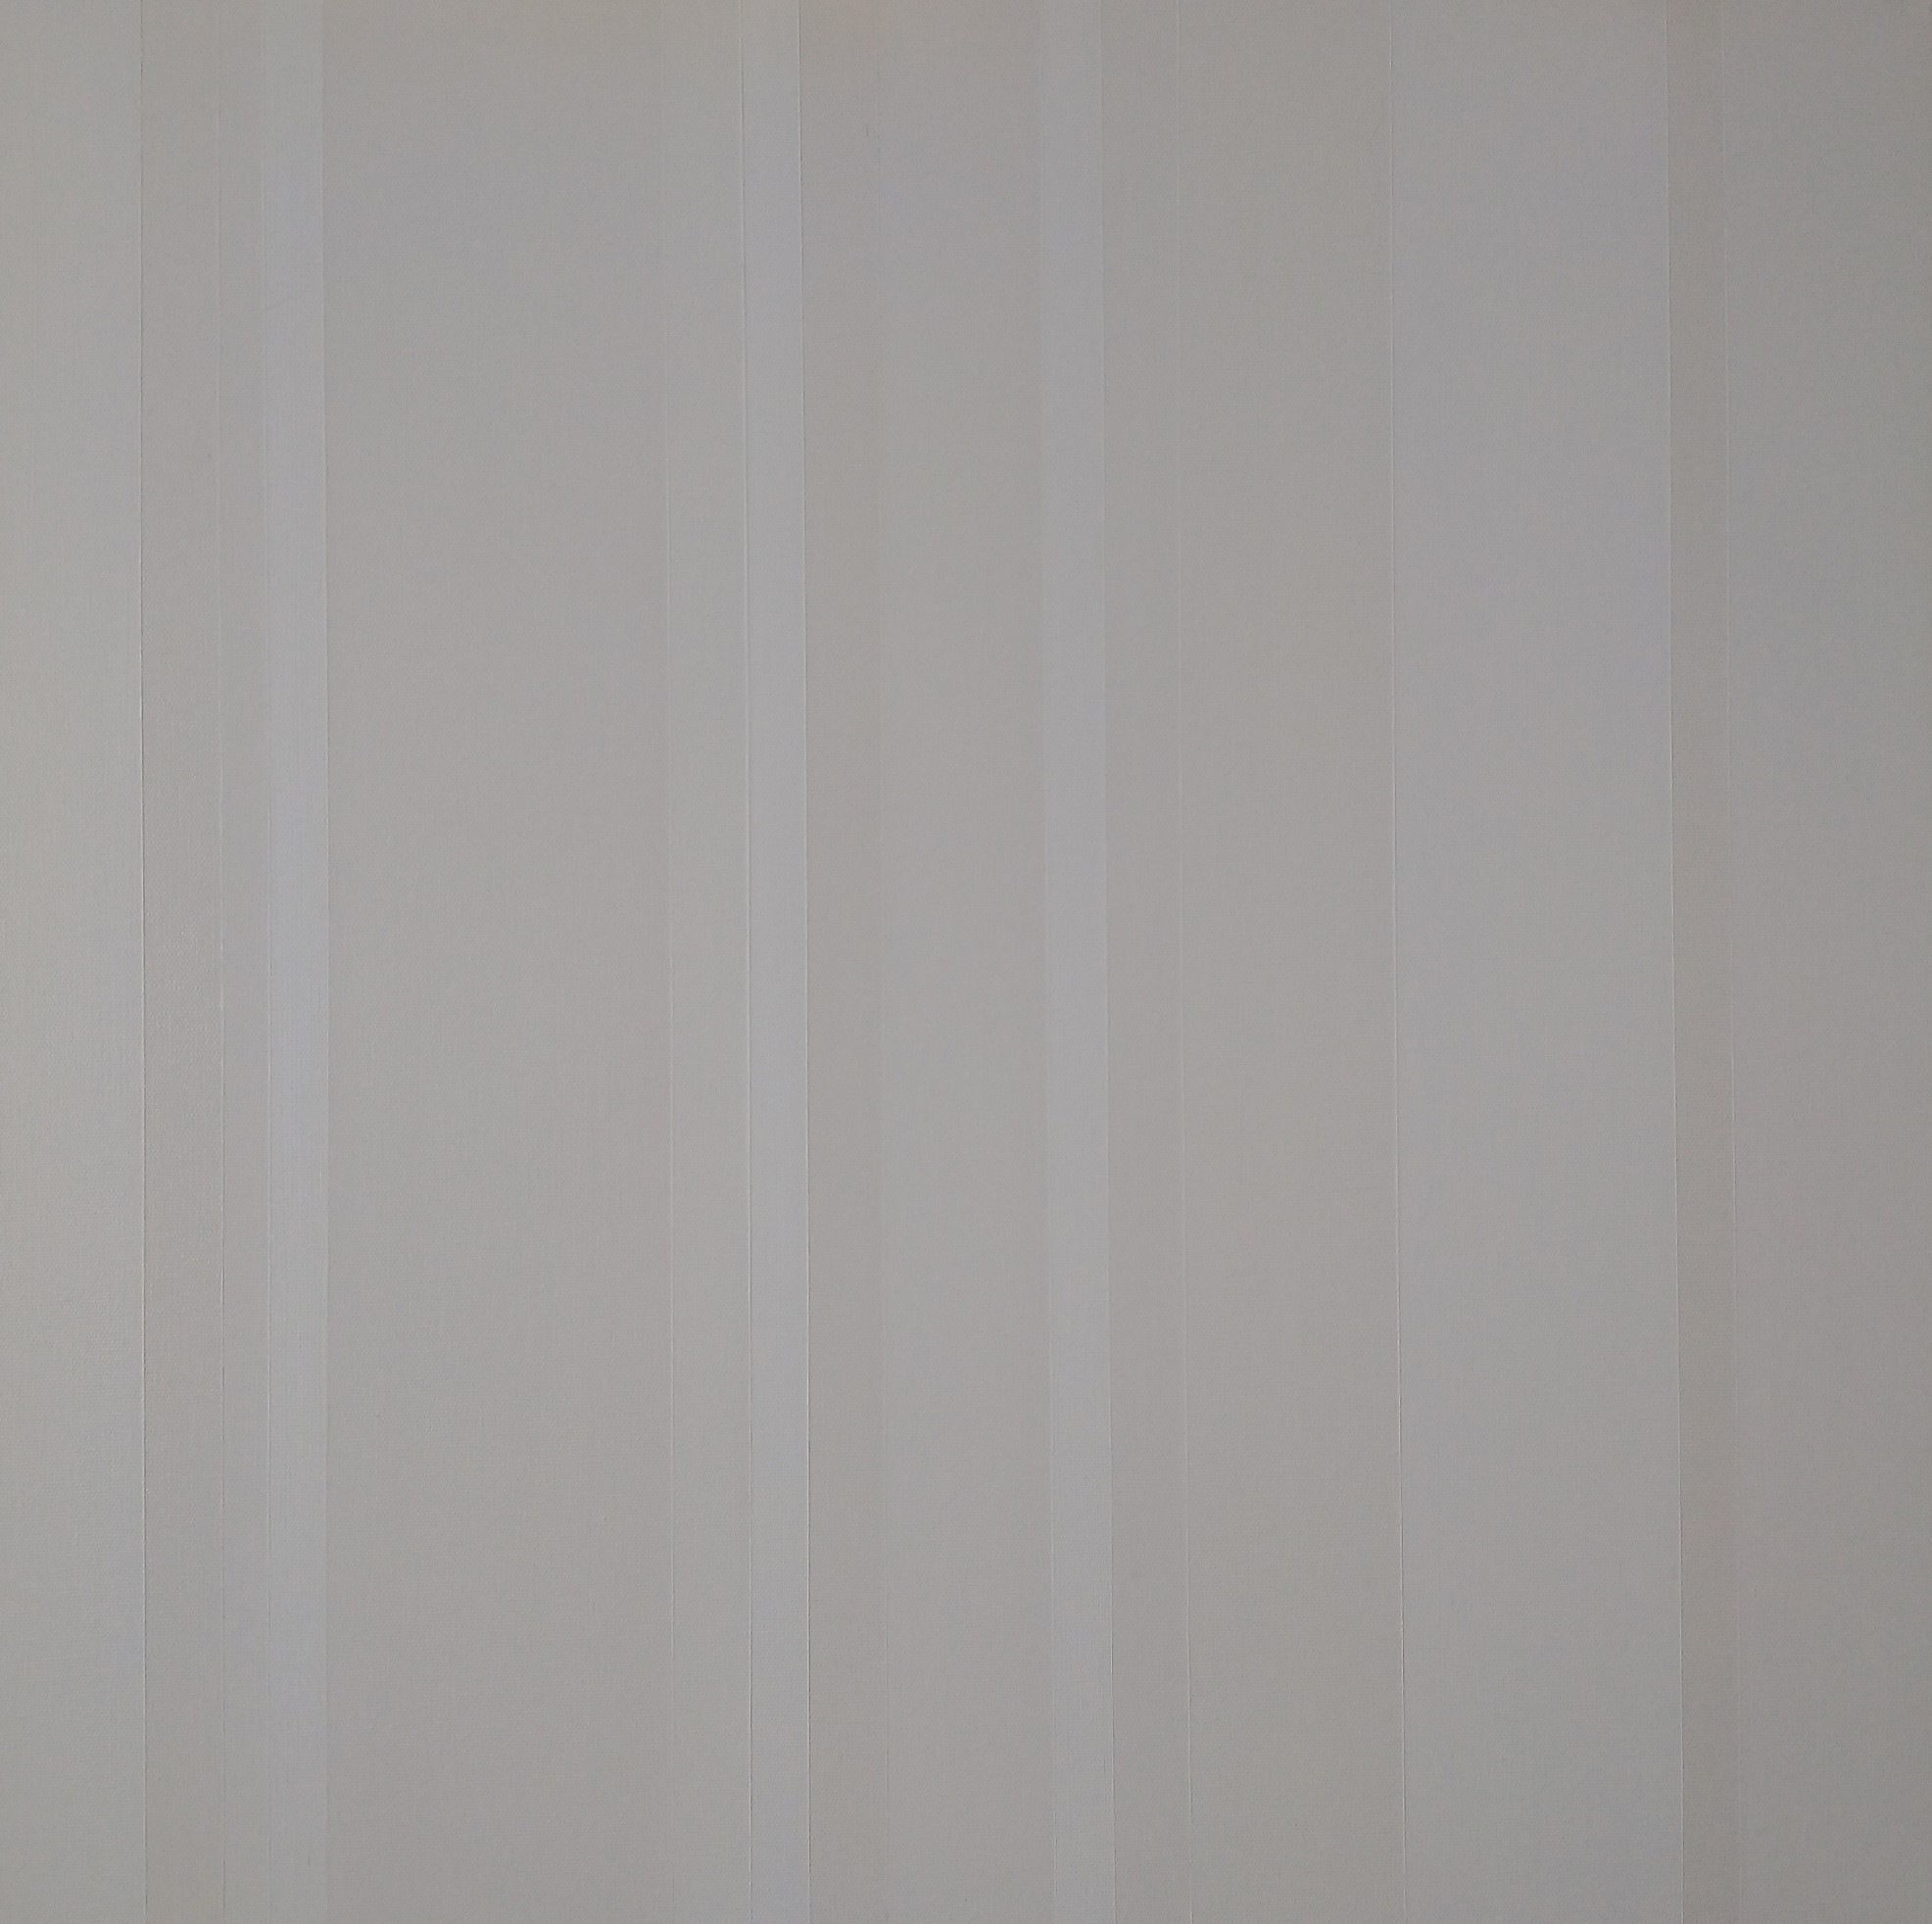 A Study In White by Simon Barwick | Lethbridge 20000 2021 Finalists | Lethbridge Gallery